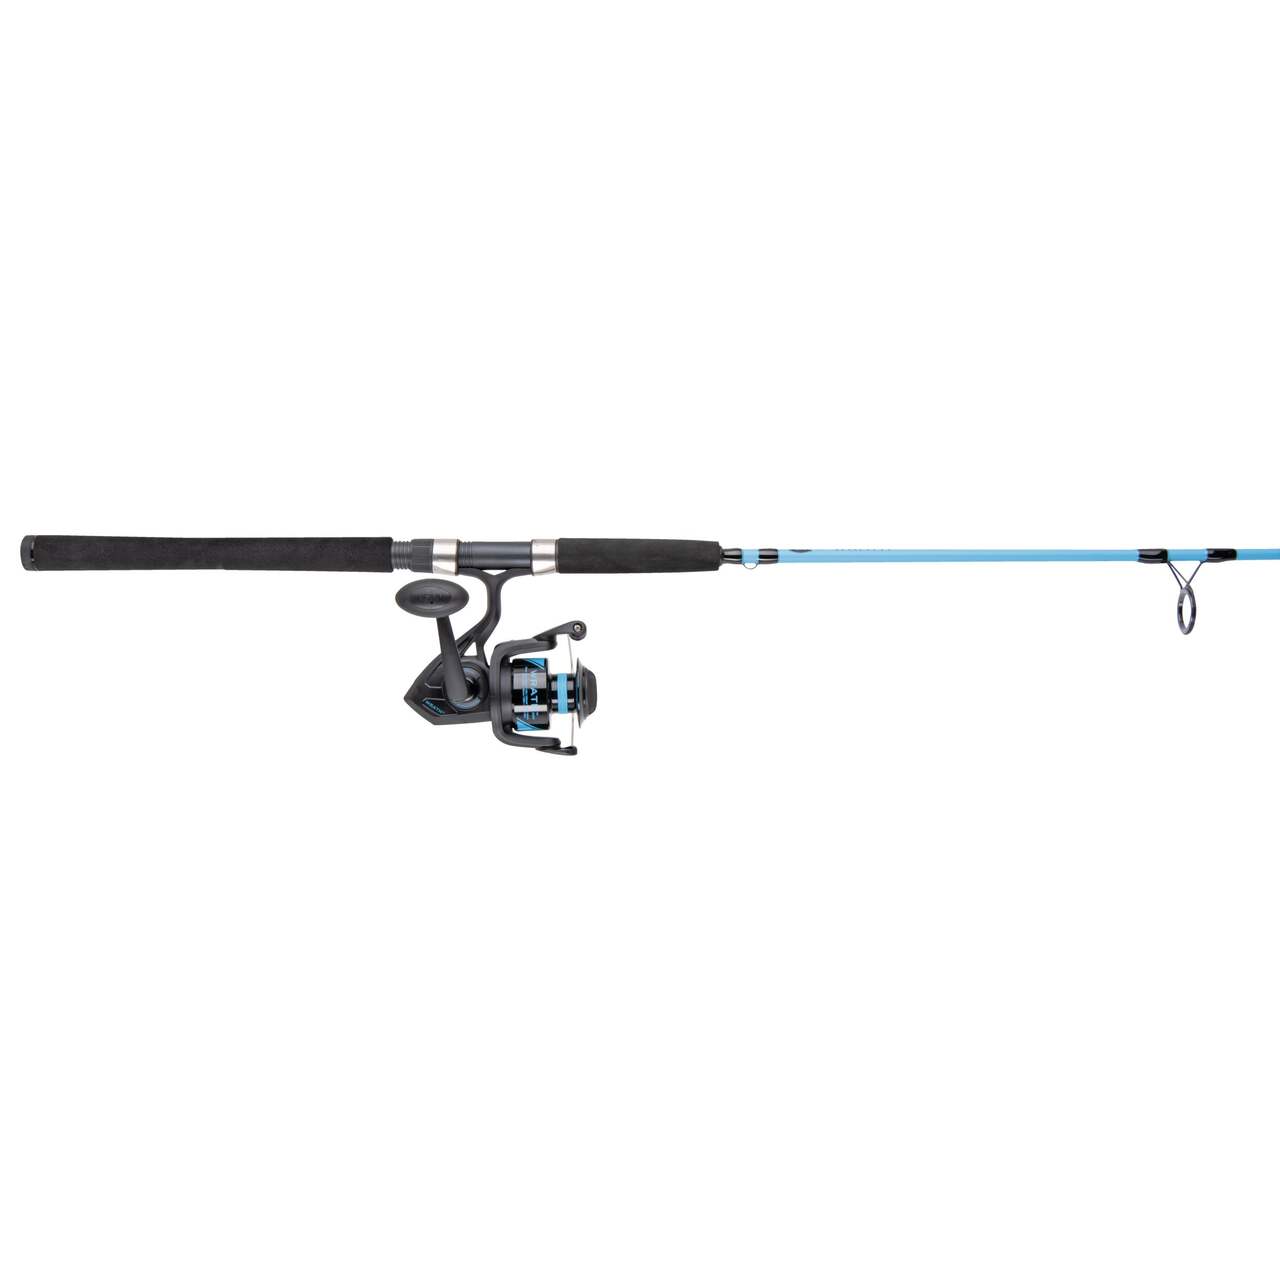 Penn Wrath Series Fishing/ Spinning Reel - WRTH 4000 - buy Penn